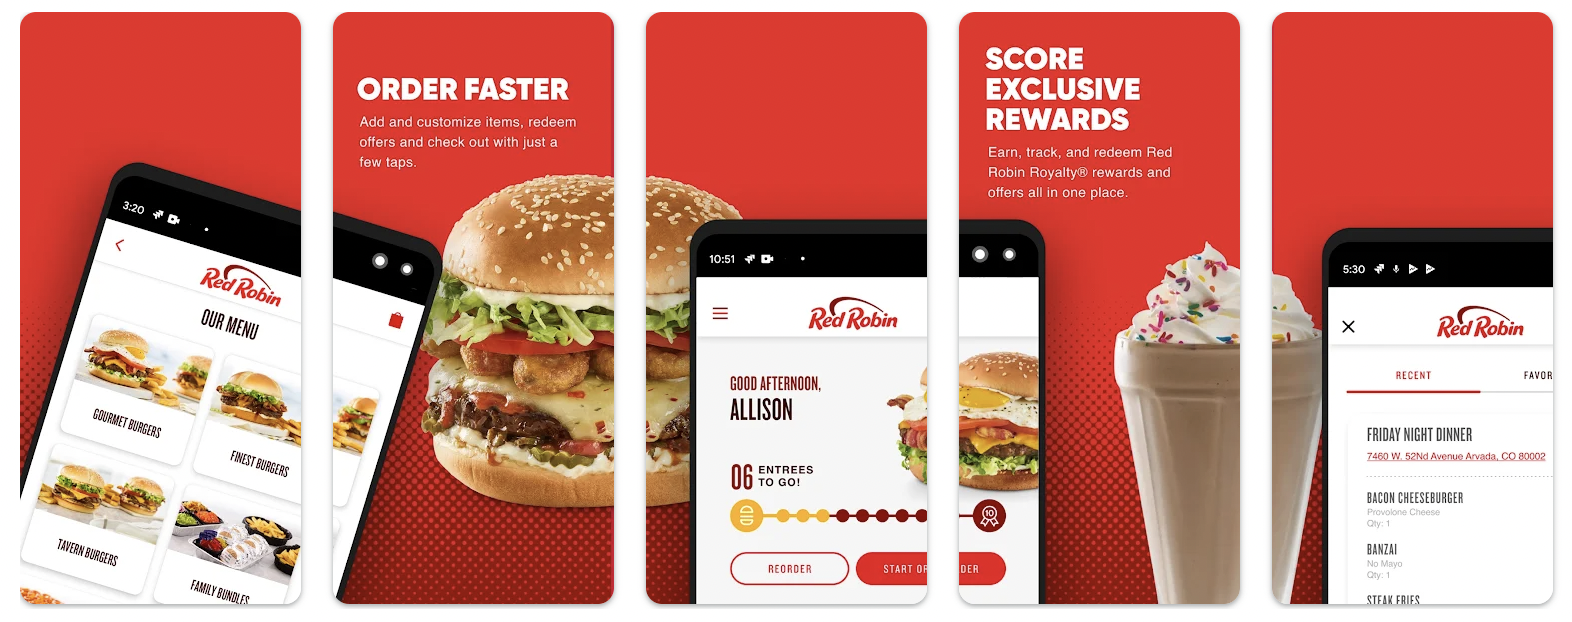 The Red Robin Rewards Program app screenshots